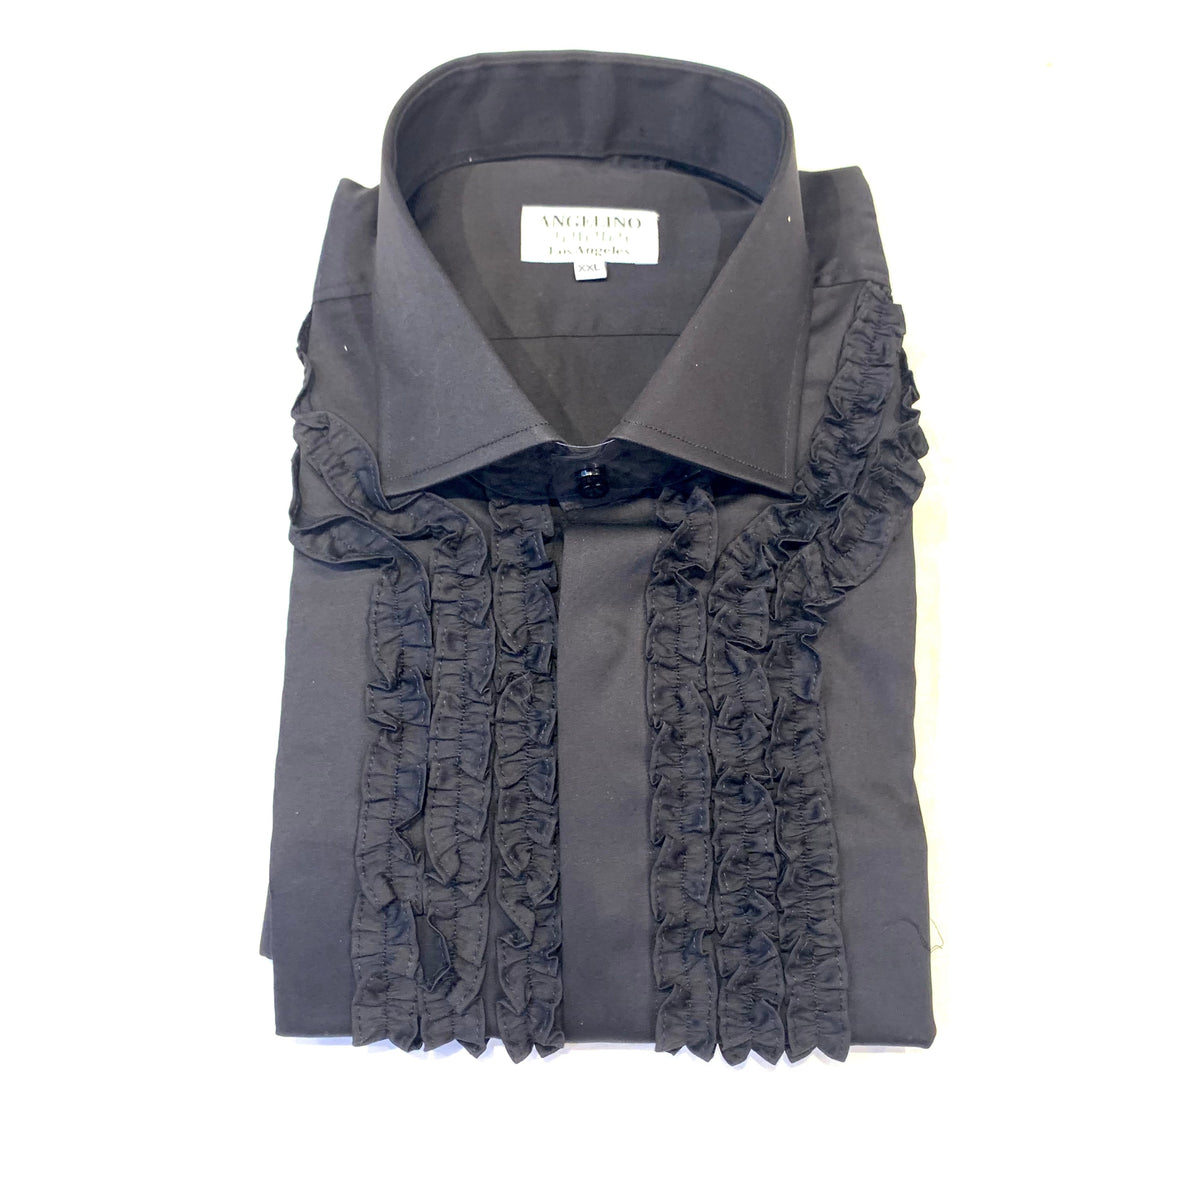 Angelino Black Tuxedo Ruffled Button Up Shirt - Dudes Boutique